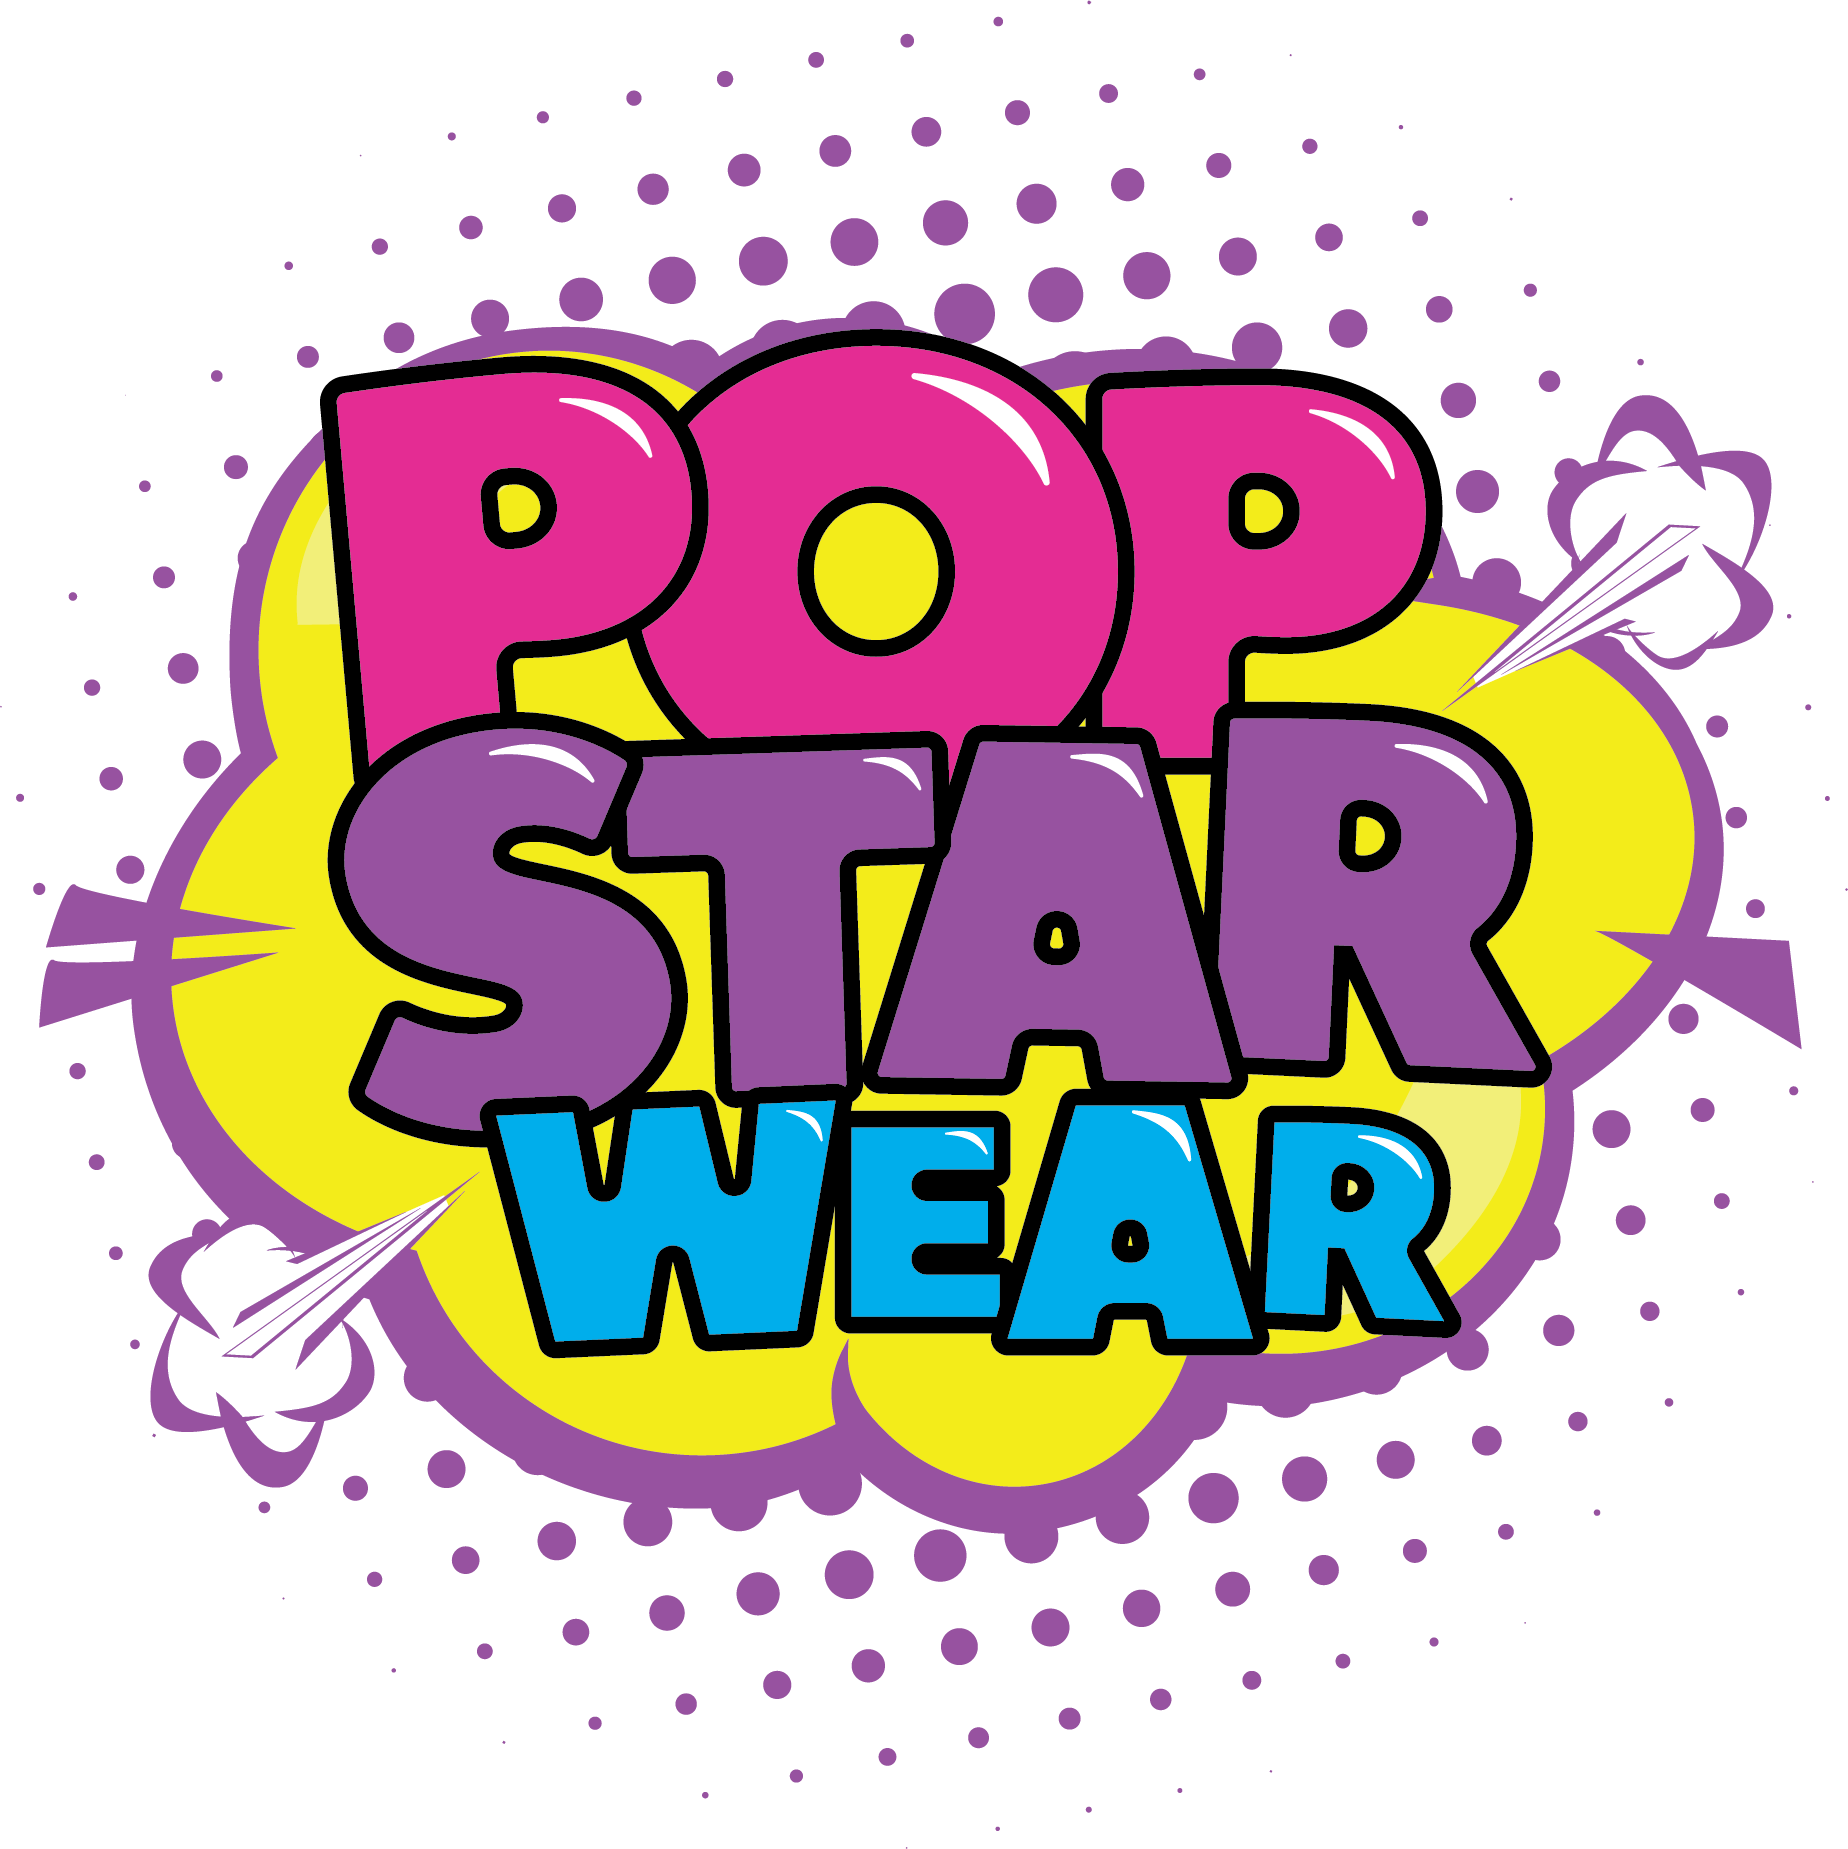 Поставь поп стар. Star надпись. Pop Star одежда. Надпись Popstar. Надпись Star цветная.